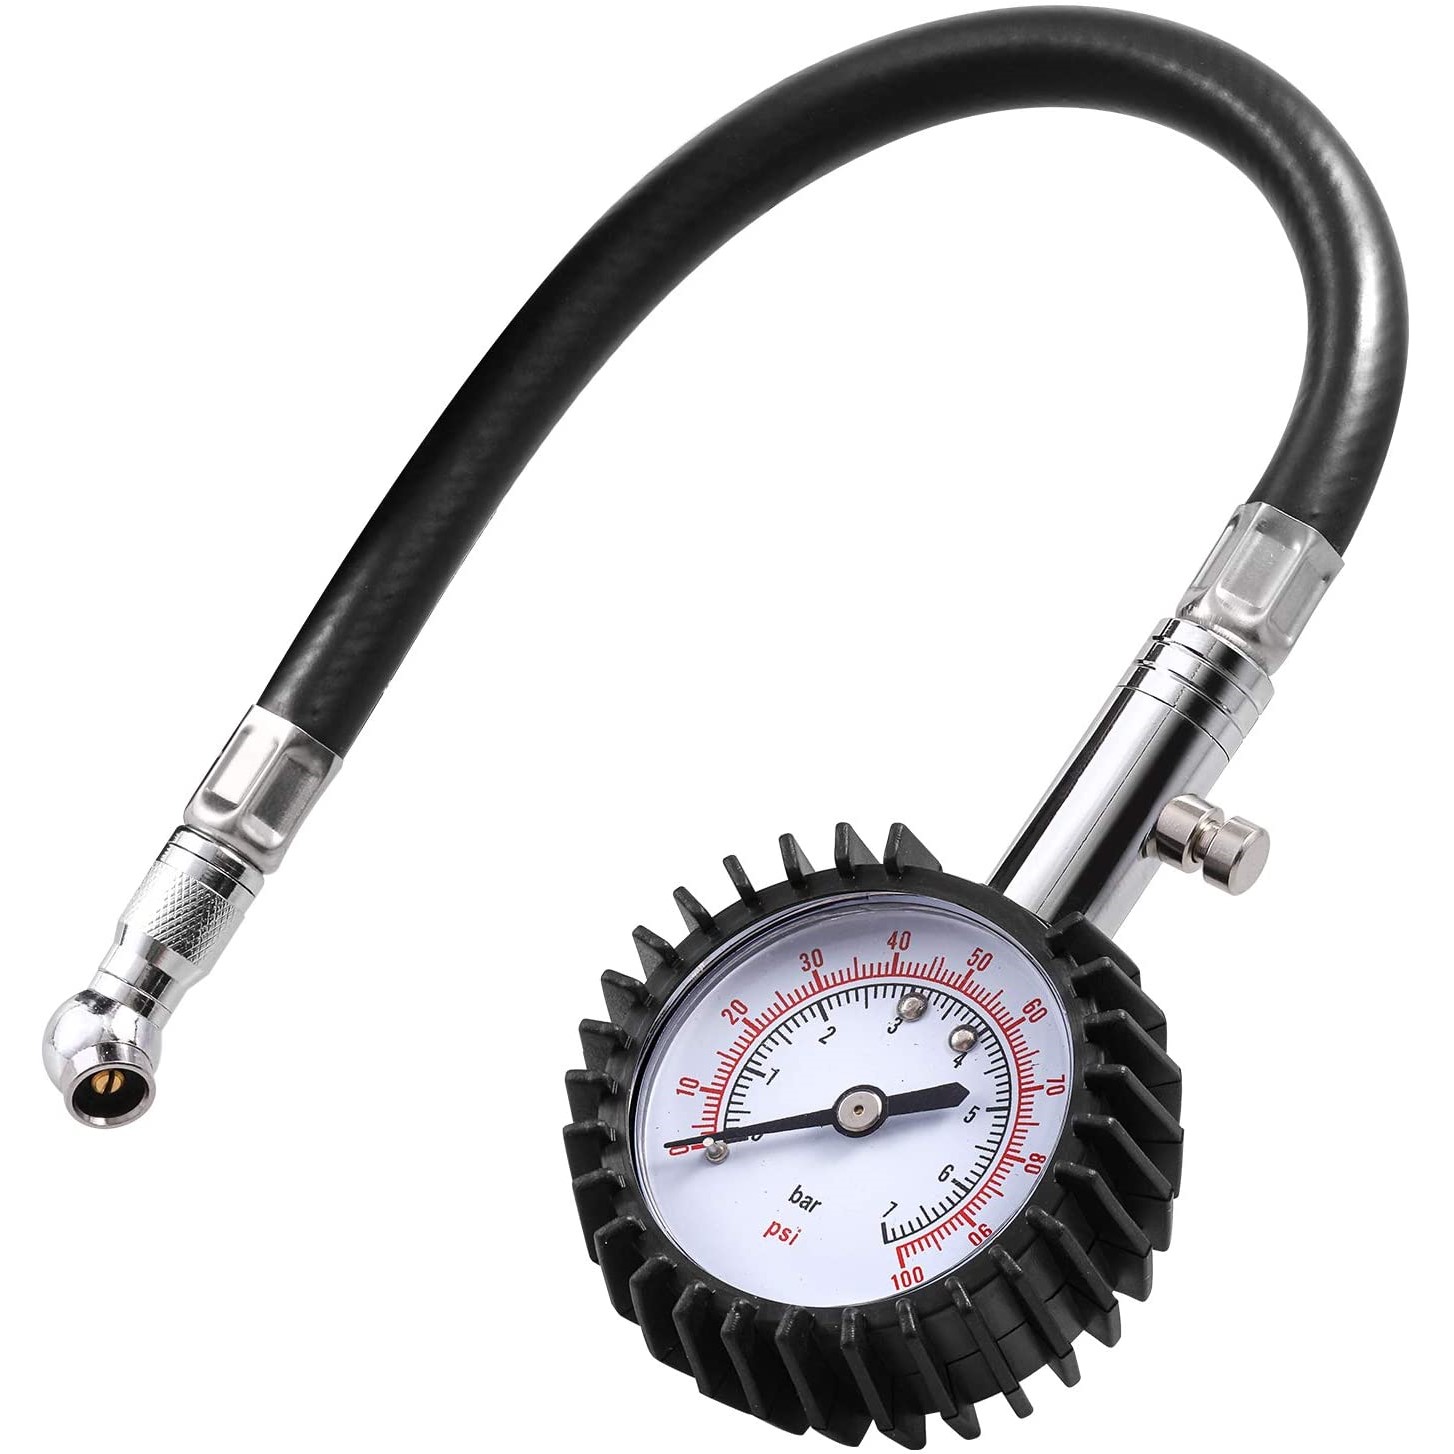 tire pressure gauge